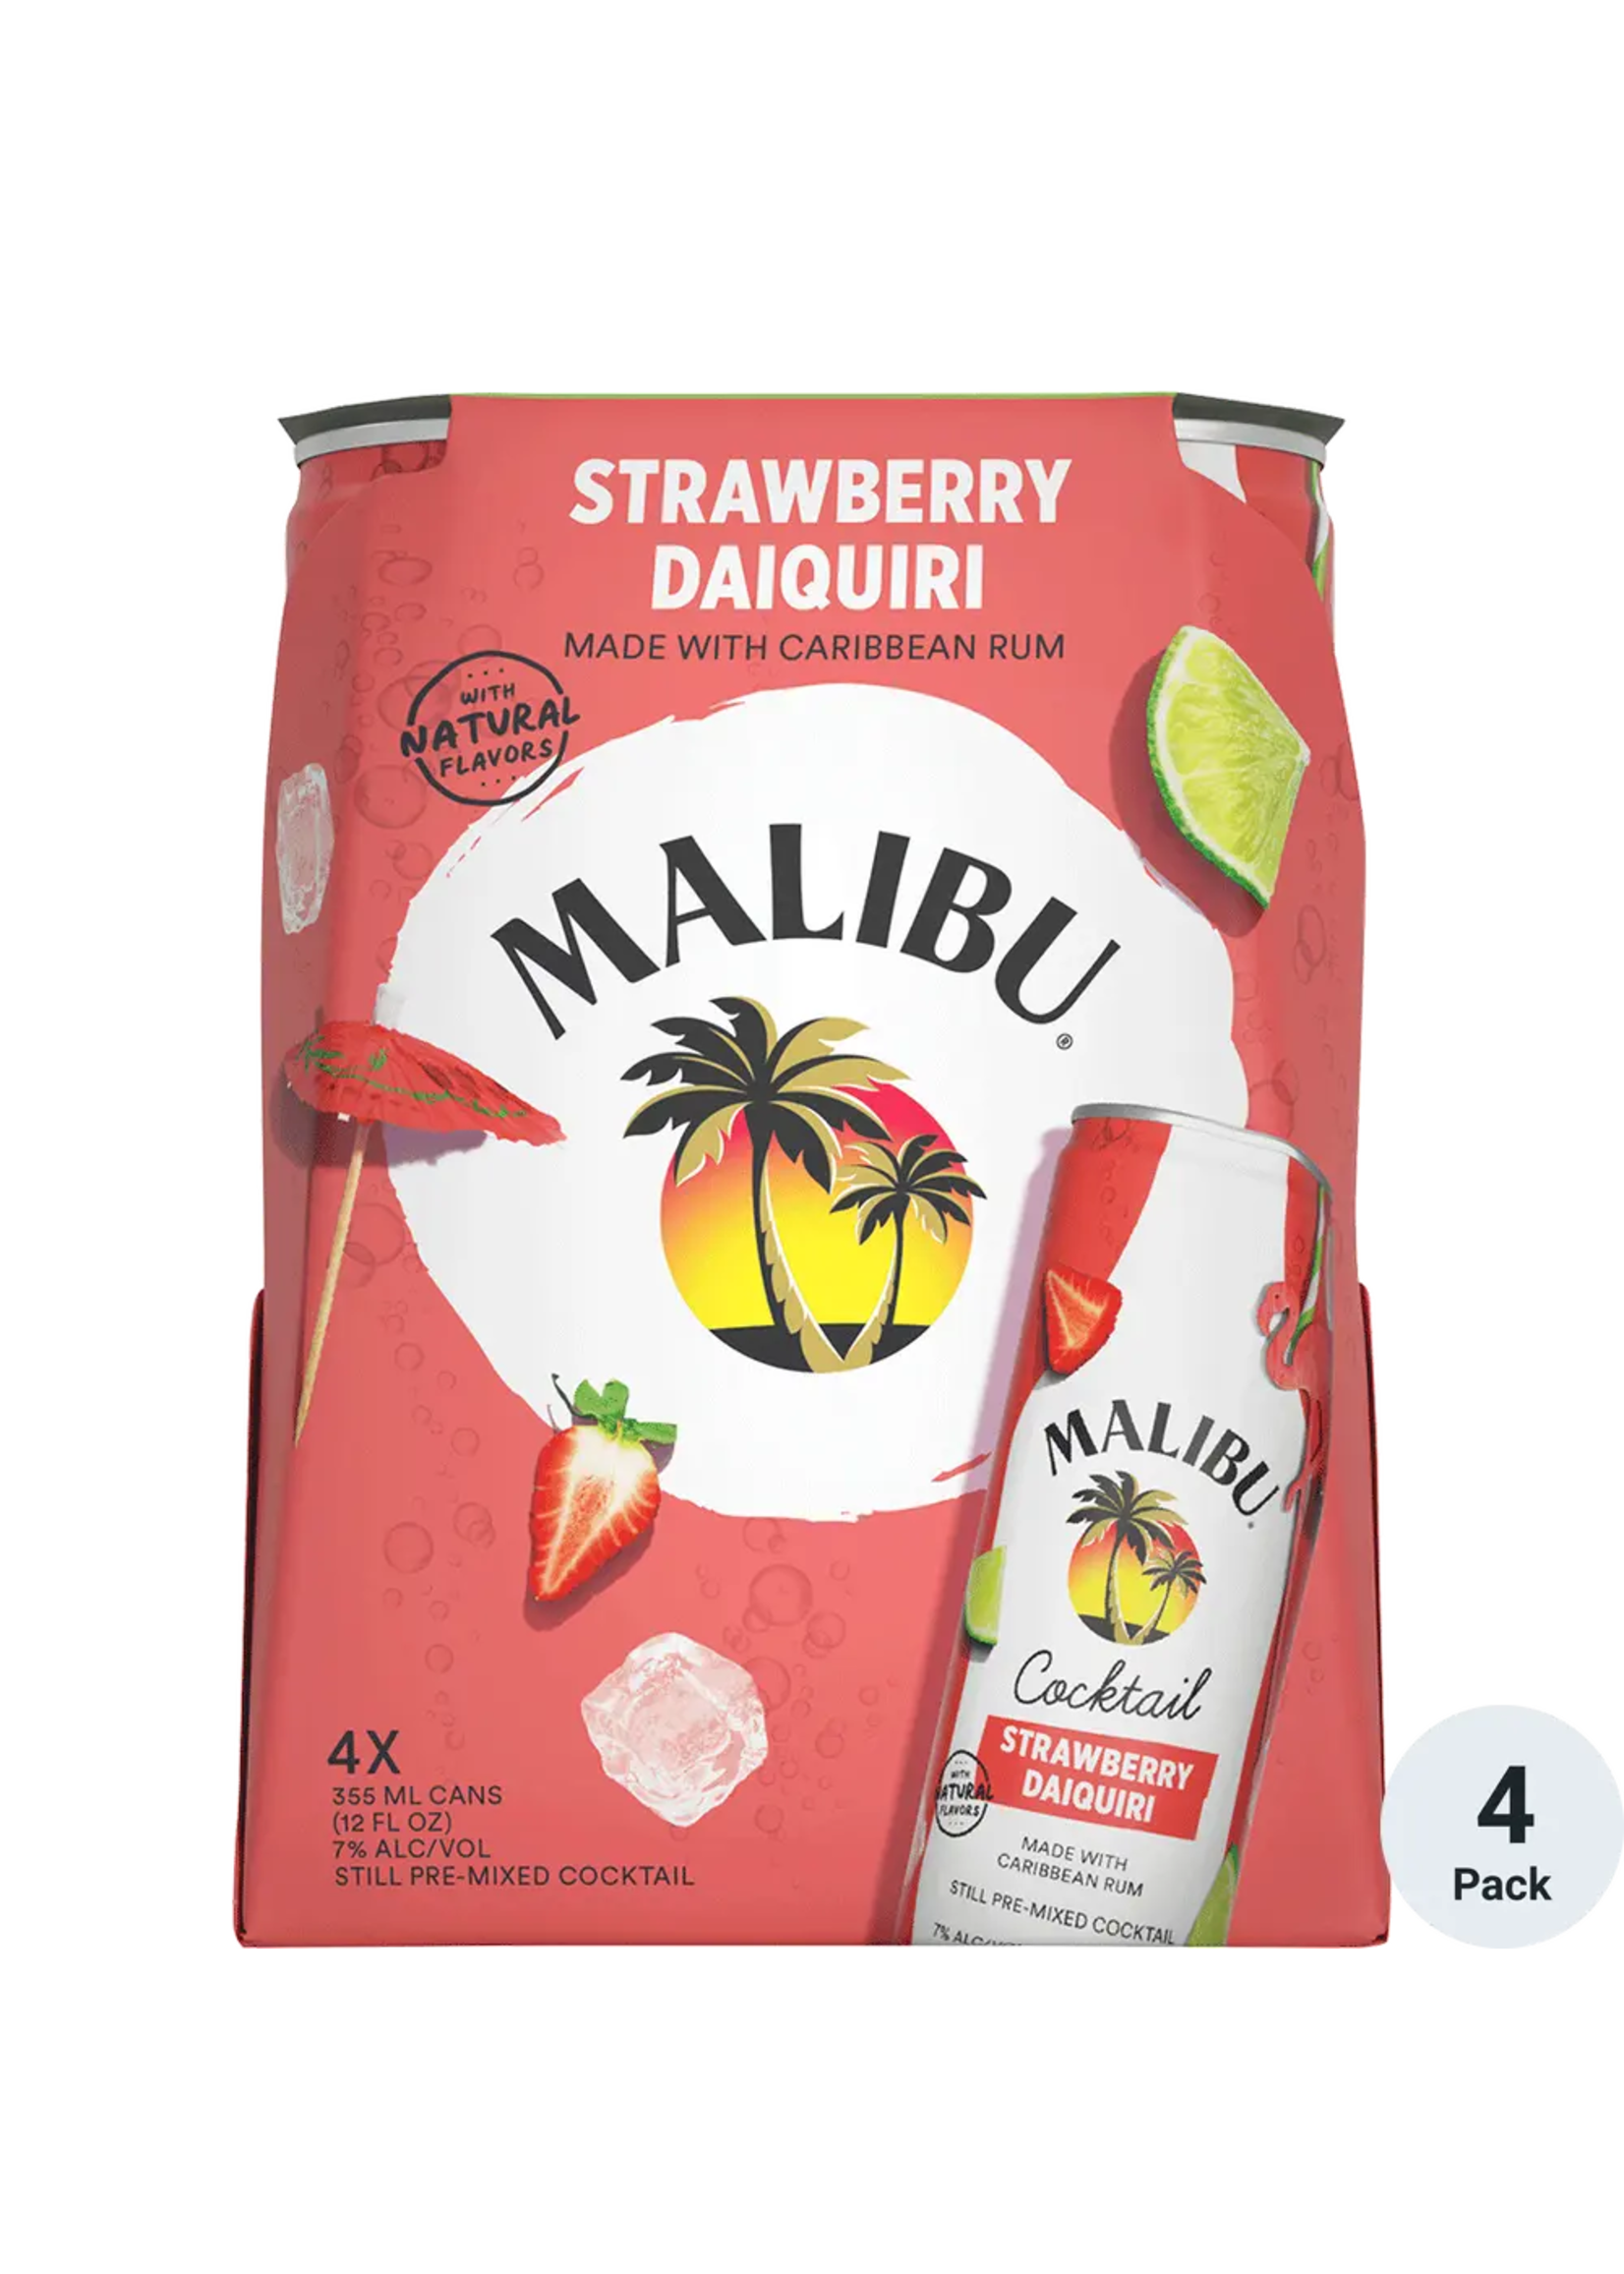 Malibu RTD Cocktail Strawberry Daiquiri 14Proof 4pk 12oz Cans